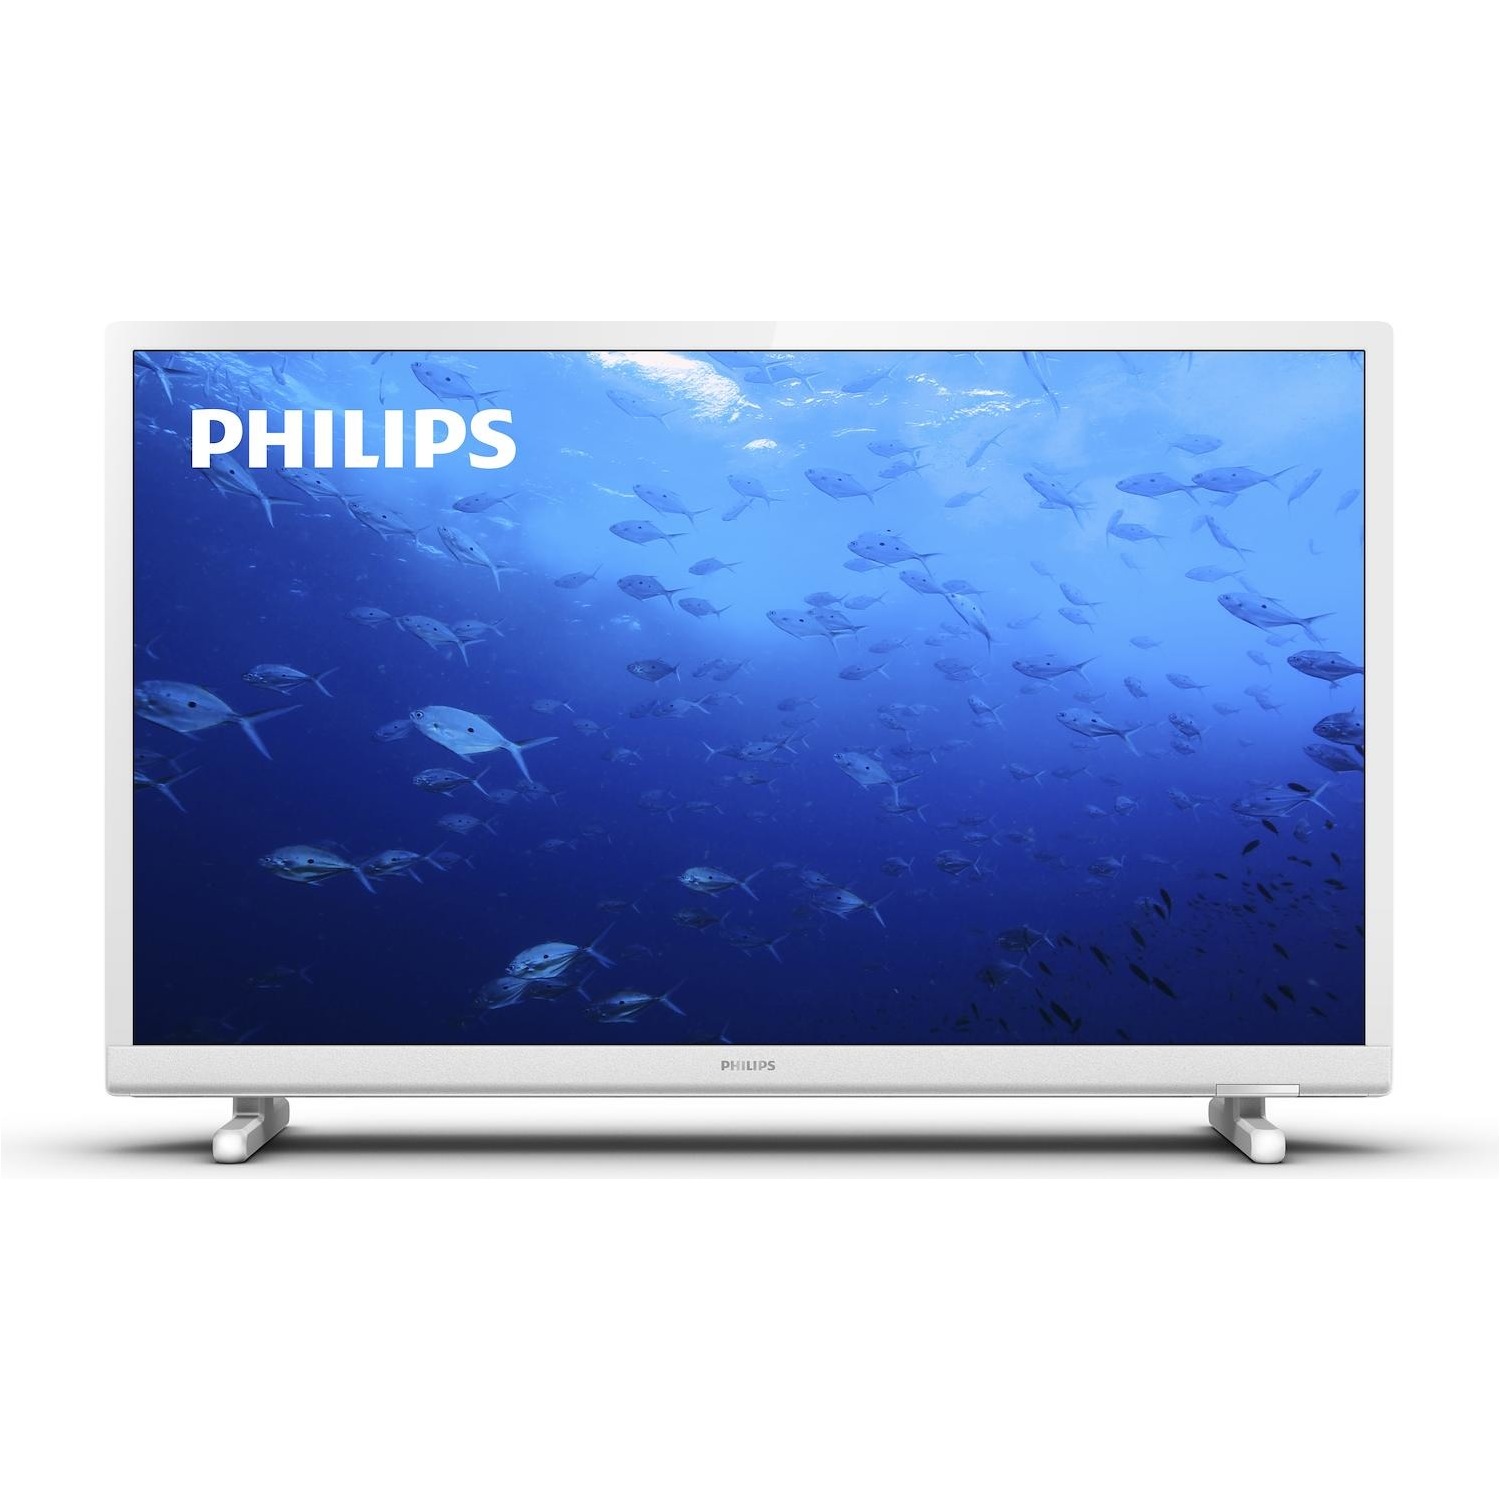 Immagine per TV LED Philips 24PHS5537 da DIMOStore